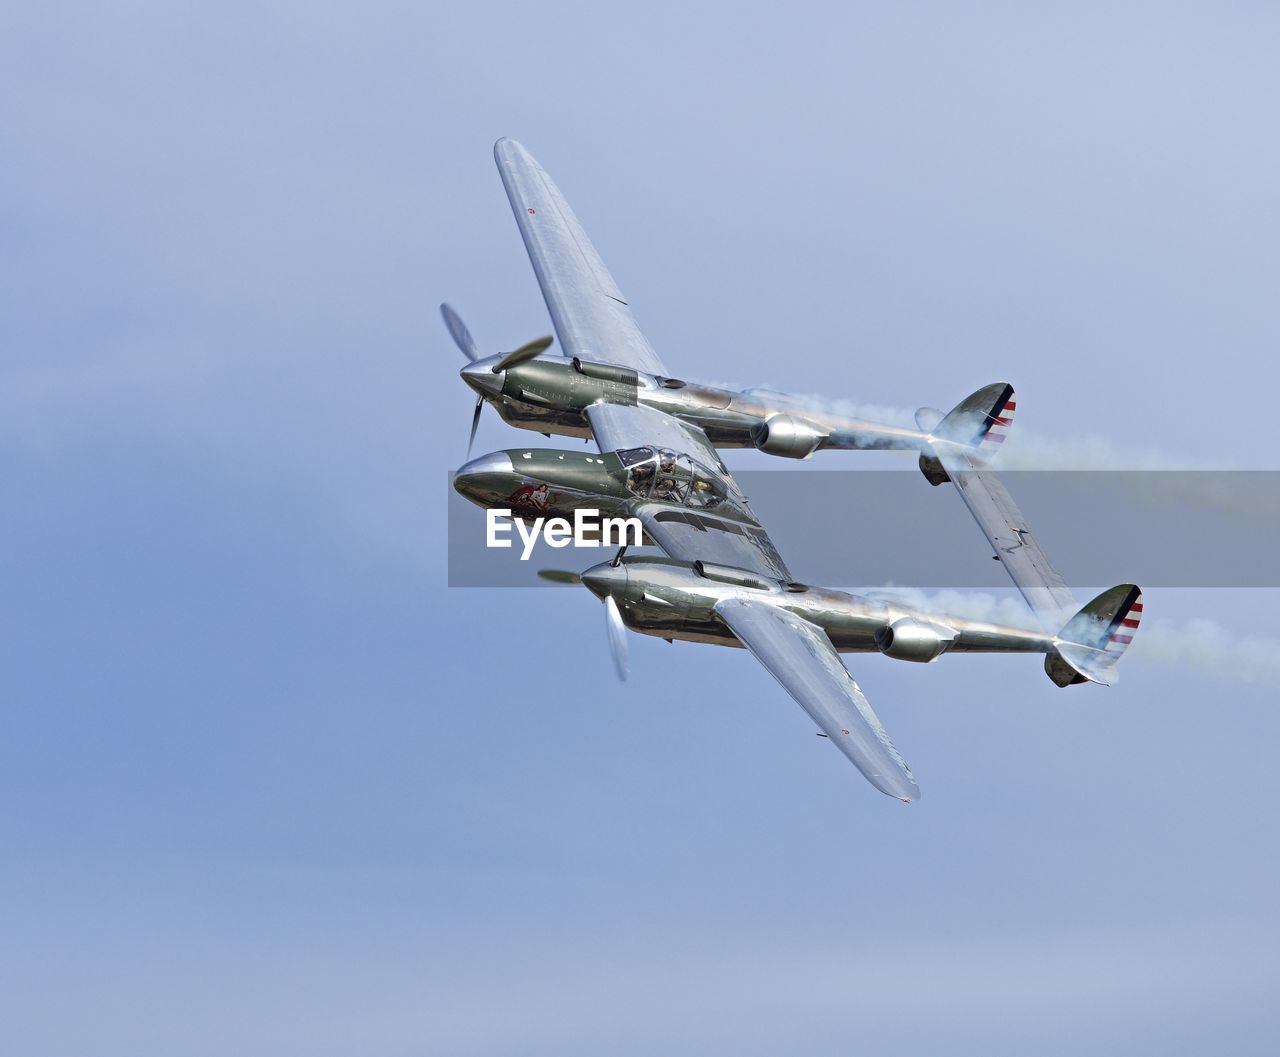 P38 lightning - saint exupery aircraft